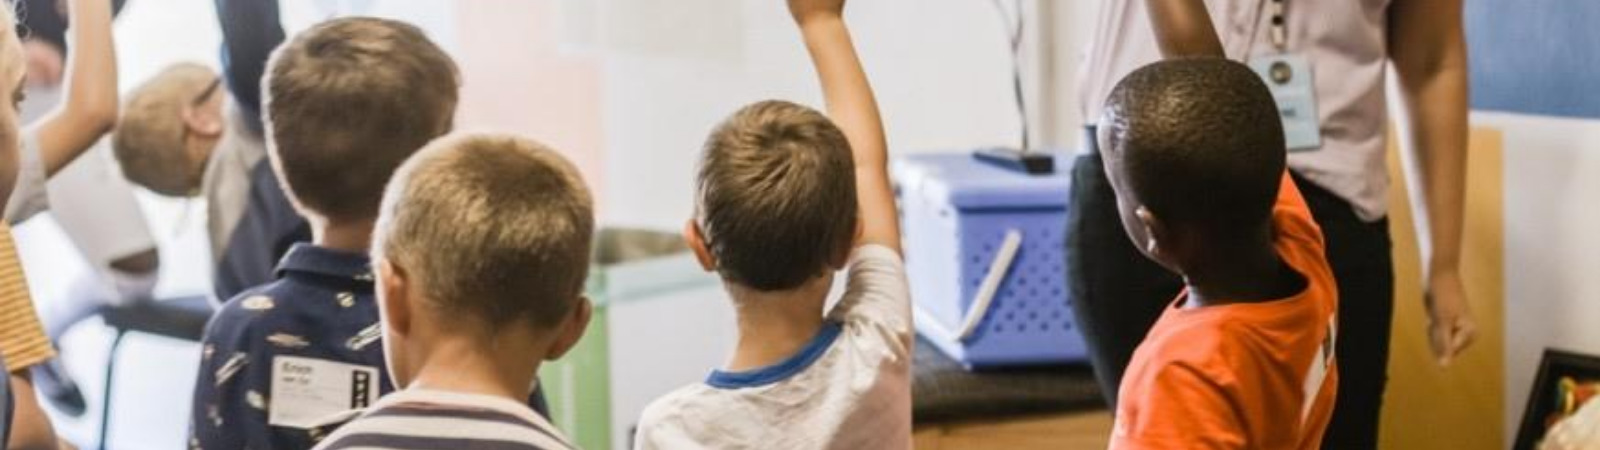 kids in a classroom raising their hands for the teacher